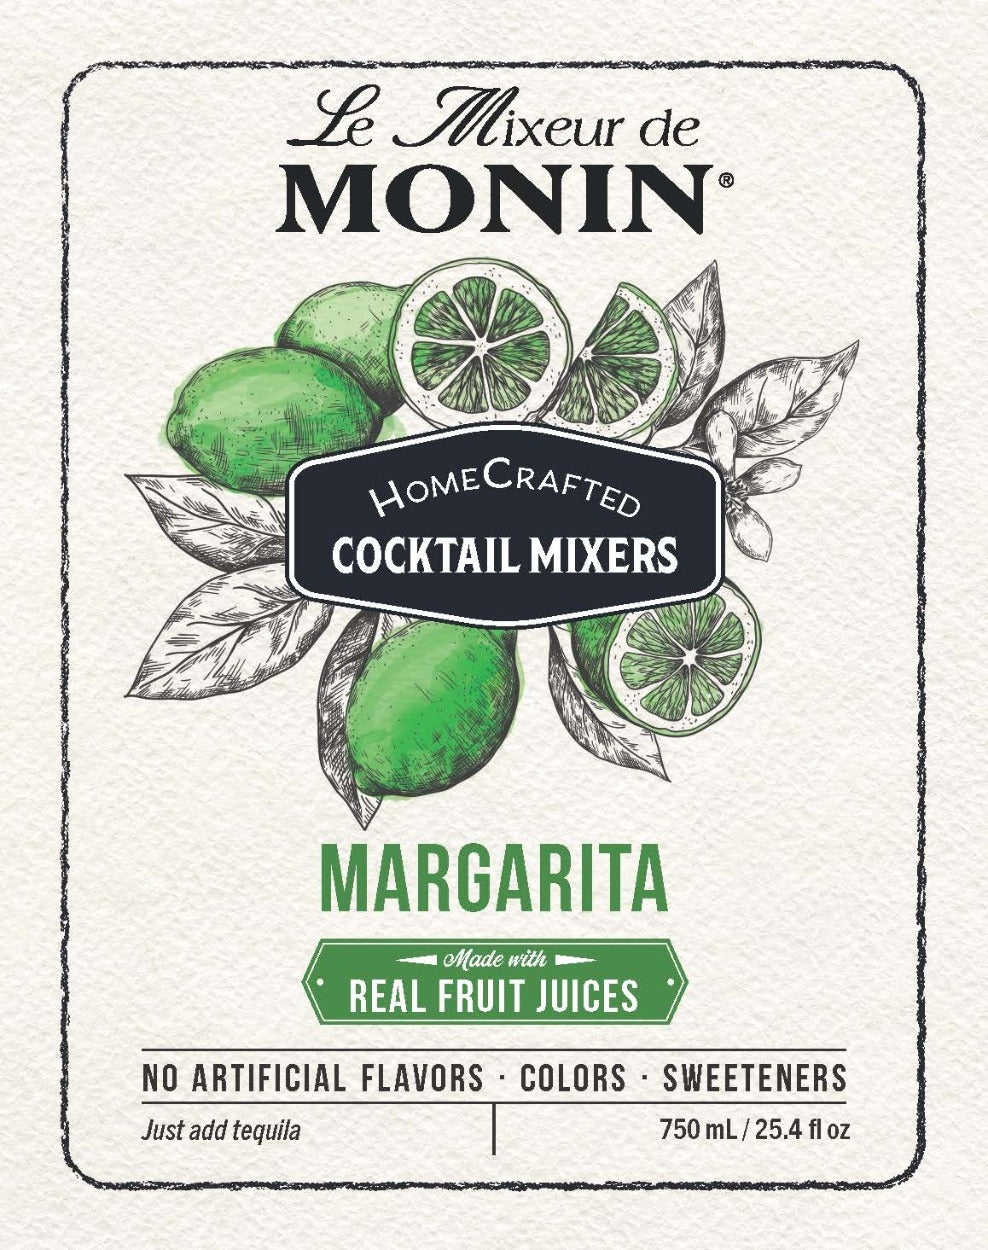 Monin Homecrafted Cocktail Mixers - 750 ml. Glass Bottle: Margarita